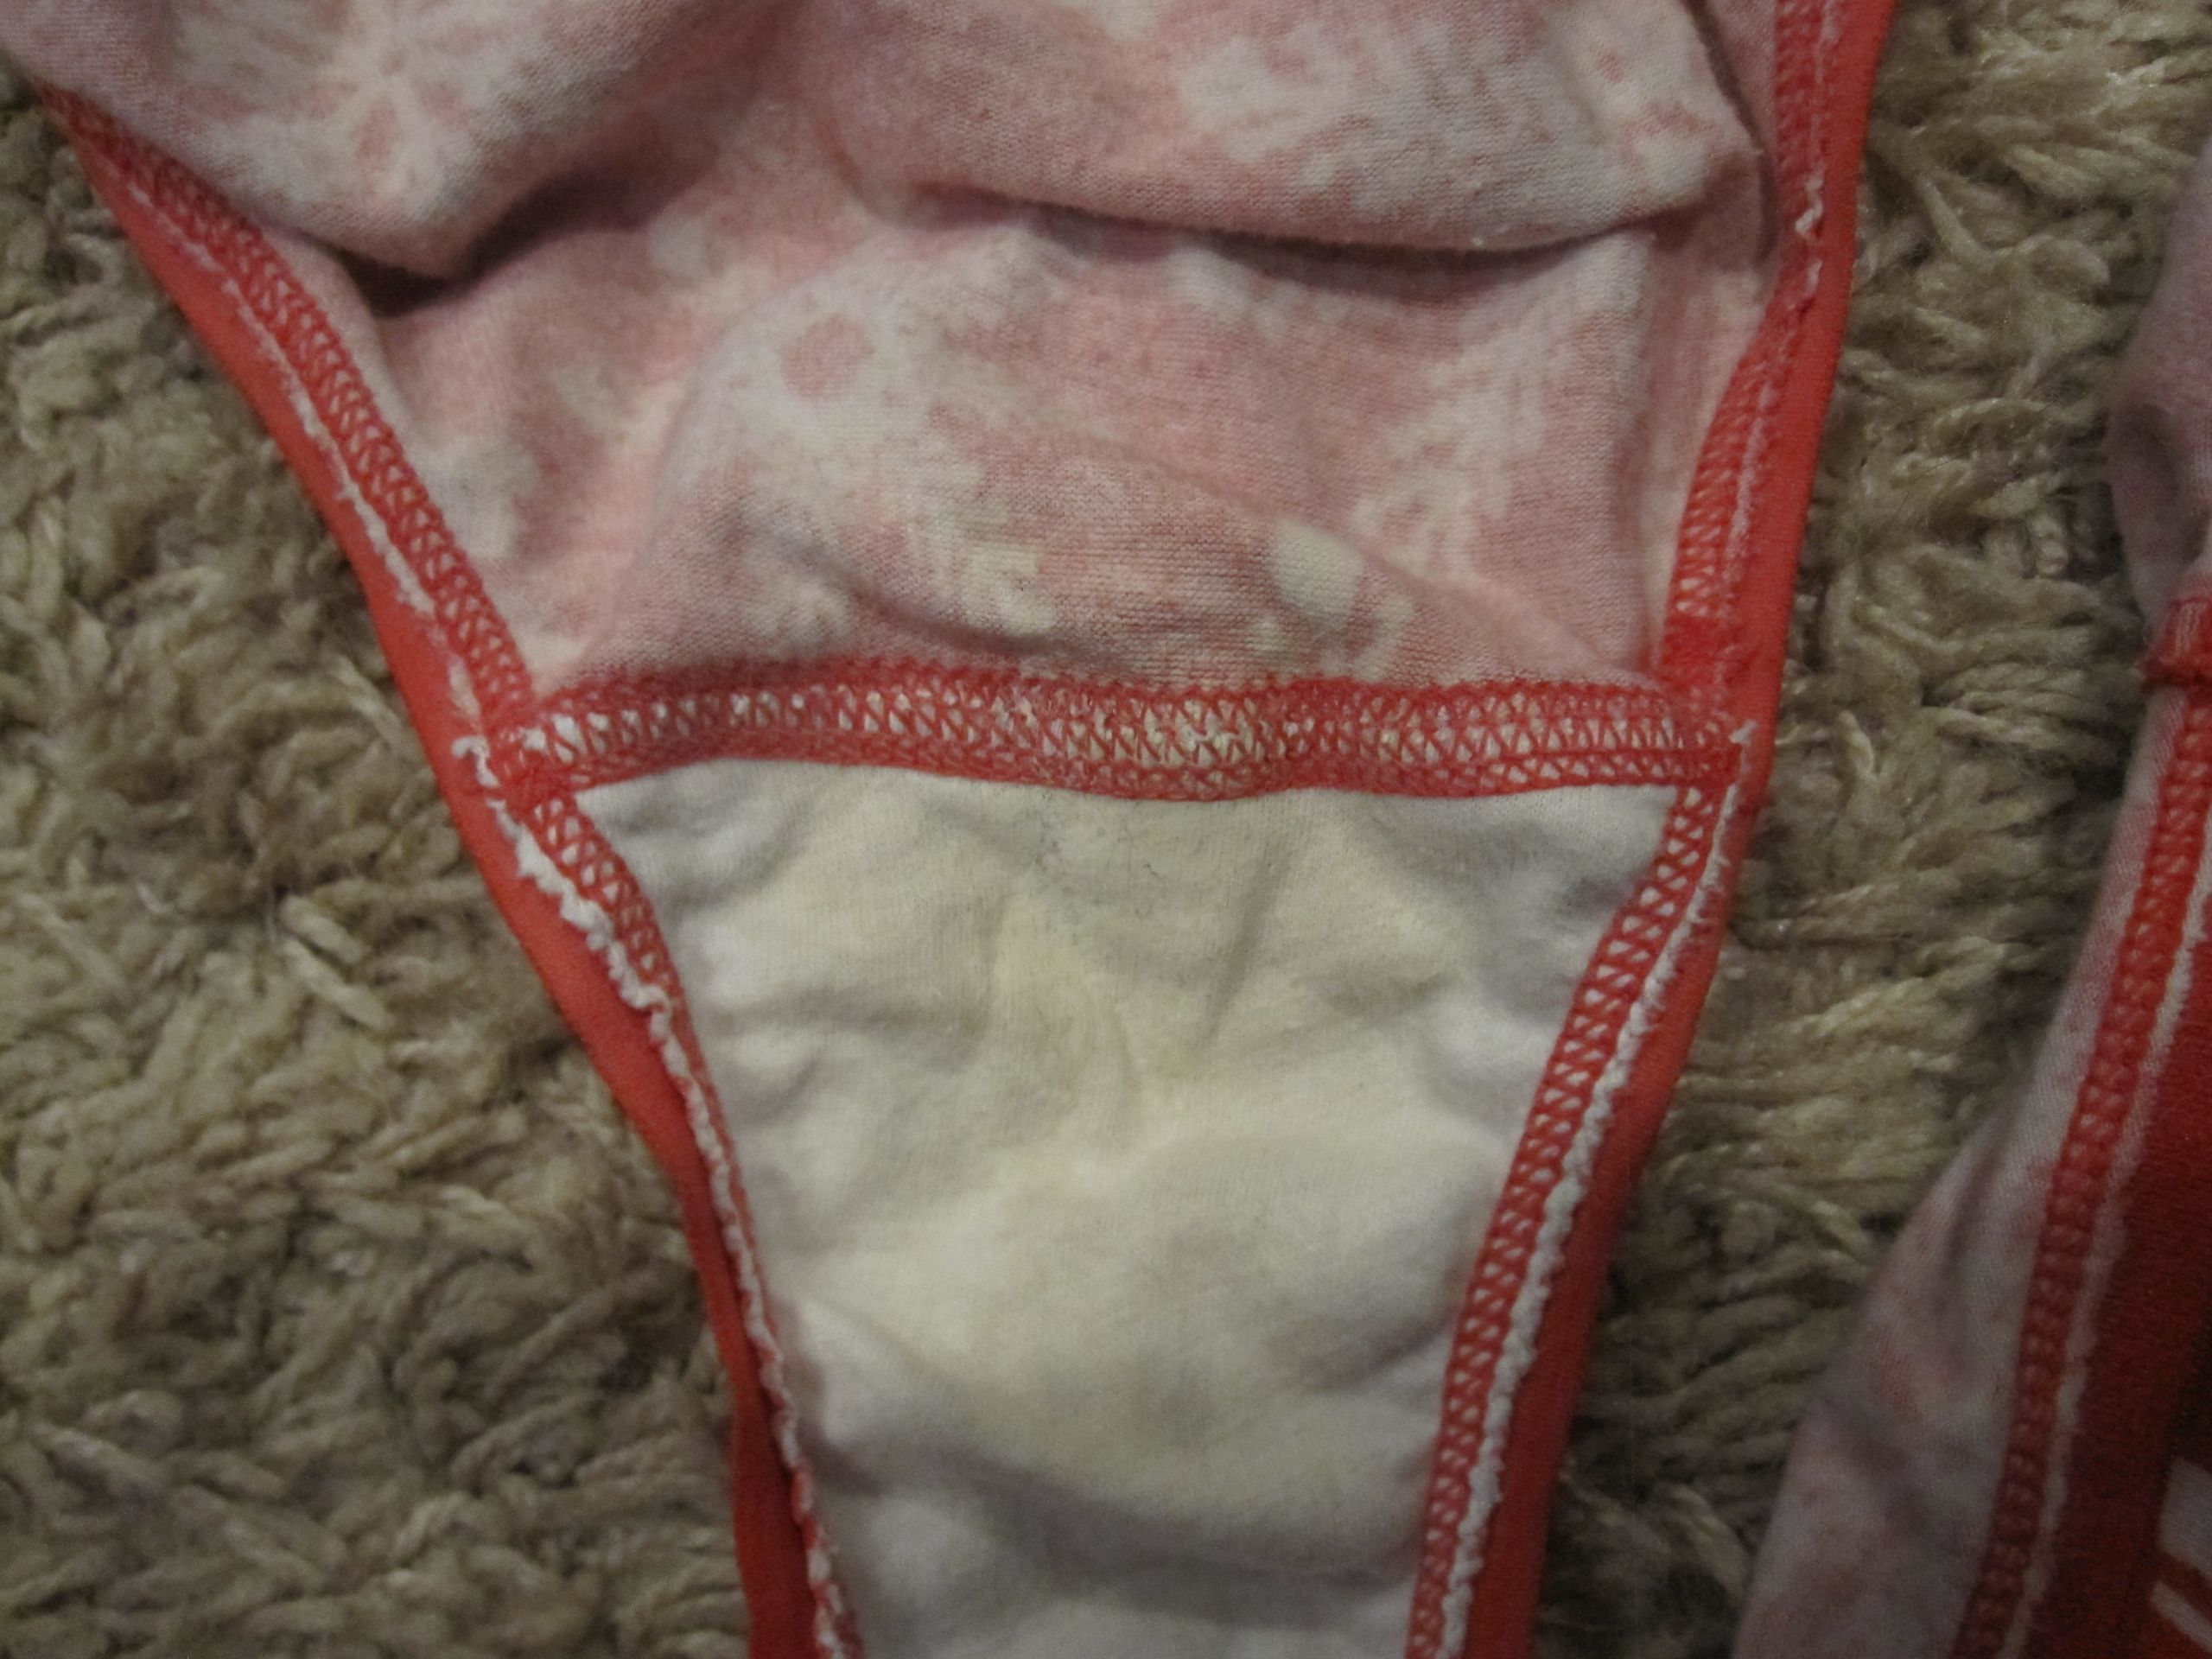 Close up of crotch